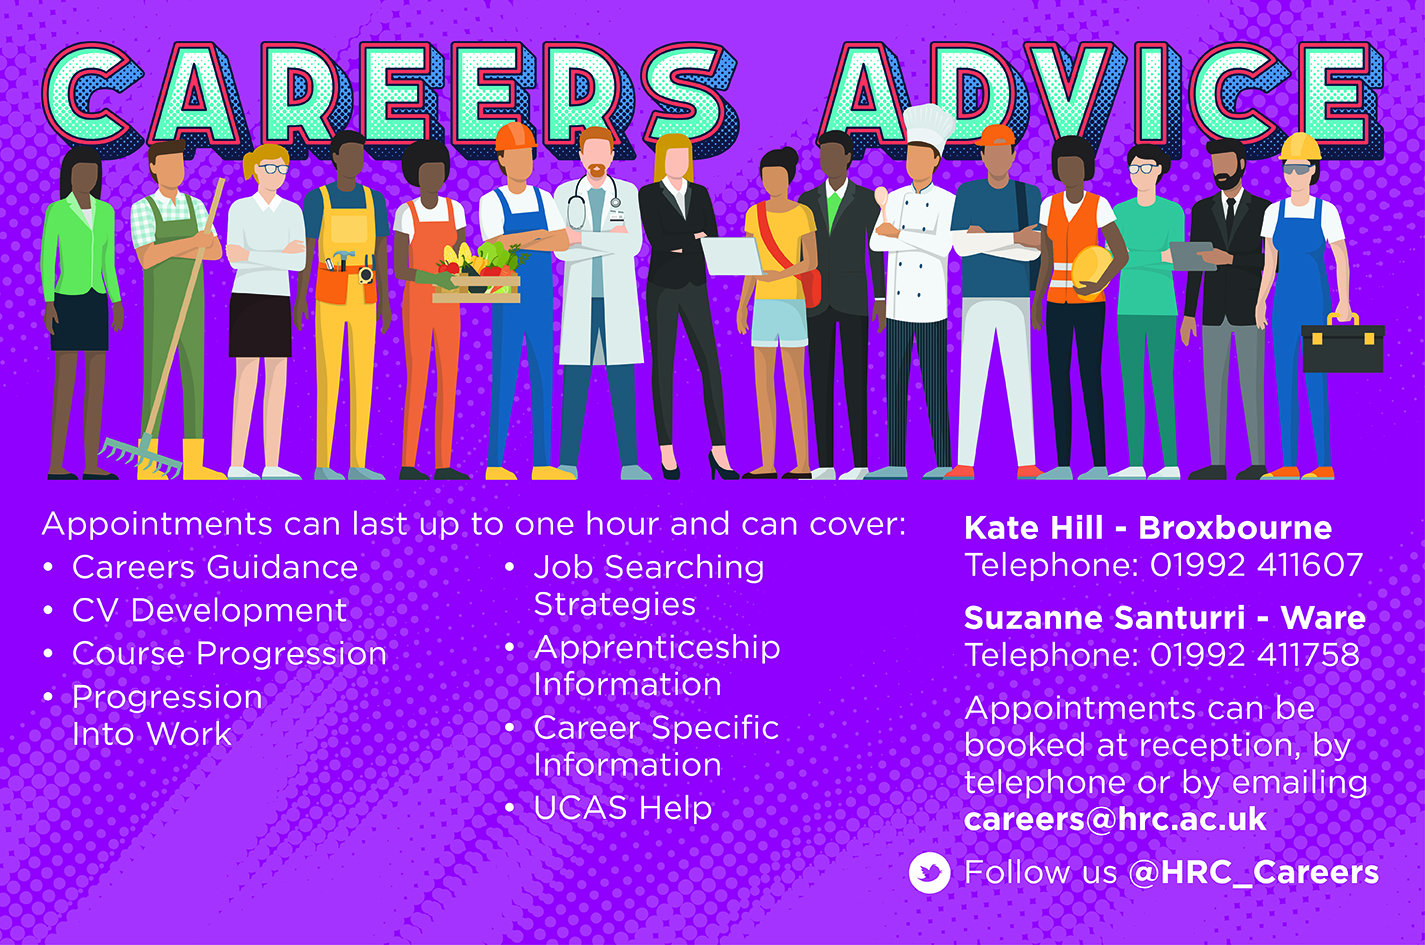 Careers Advice Screen 2022 1425 by 945 004 1.2